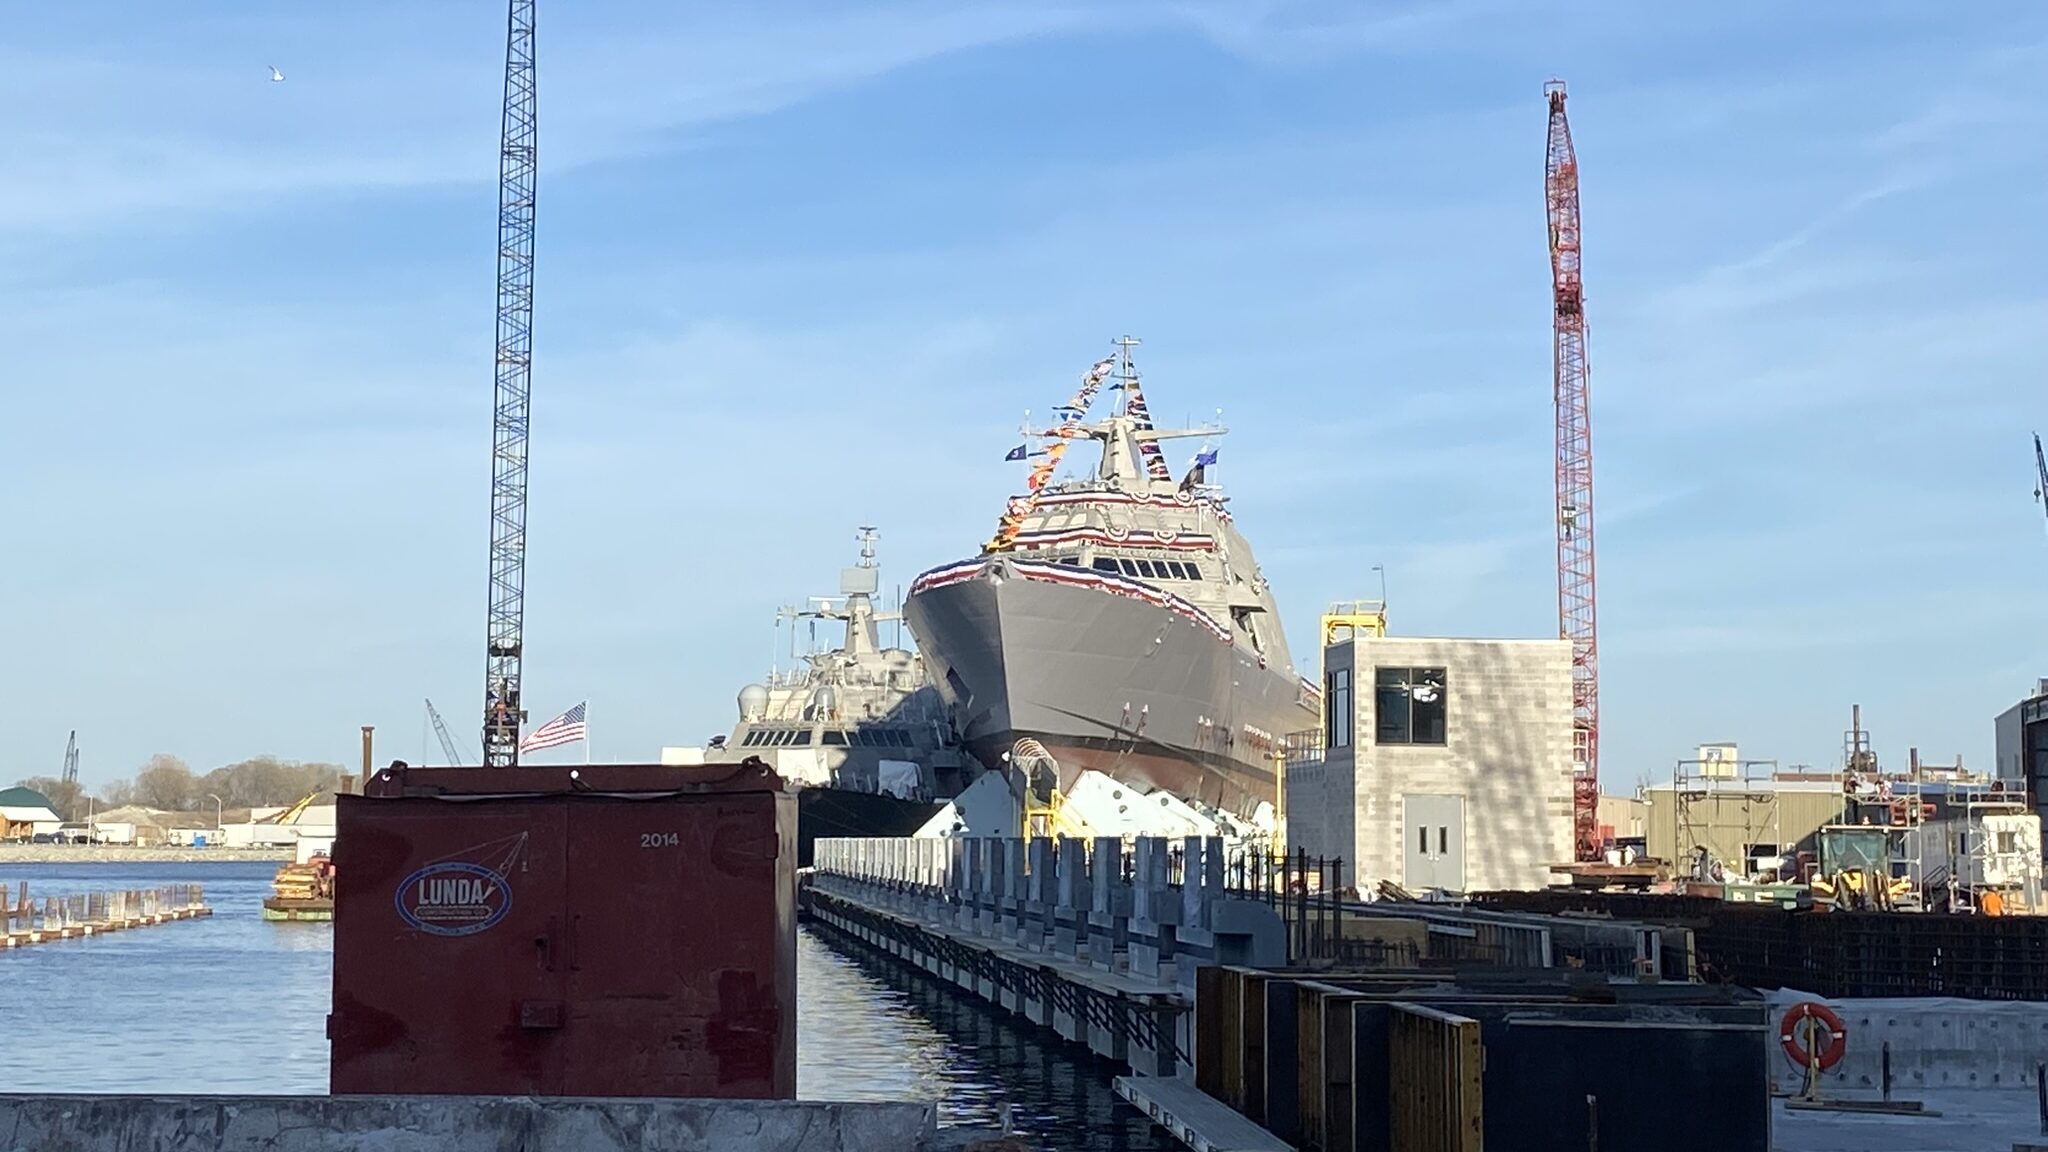 Fincantieri finishing $300M shipyard renovations, a big bet on the